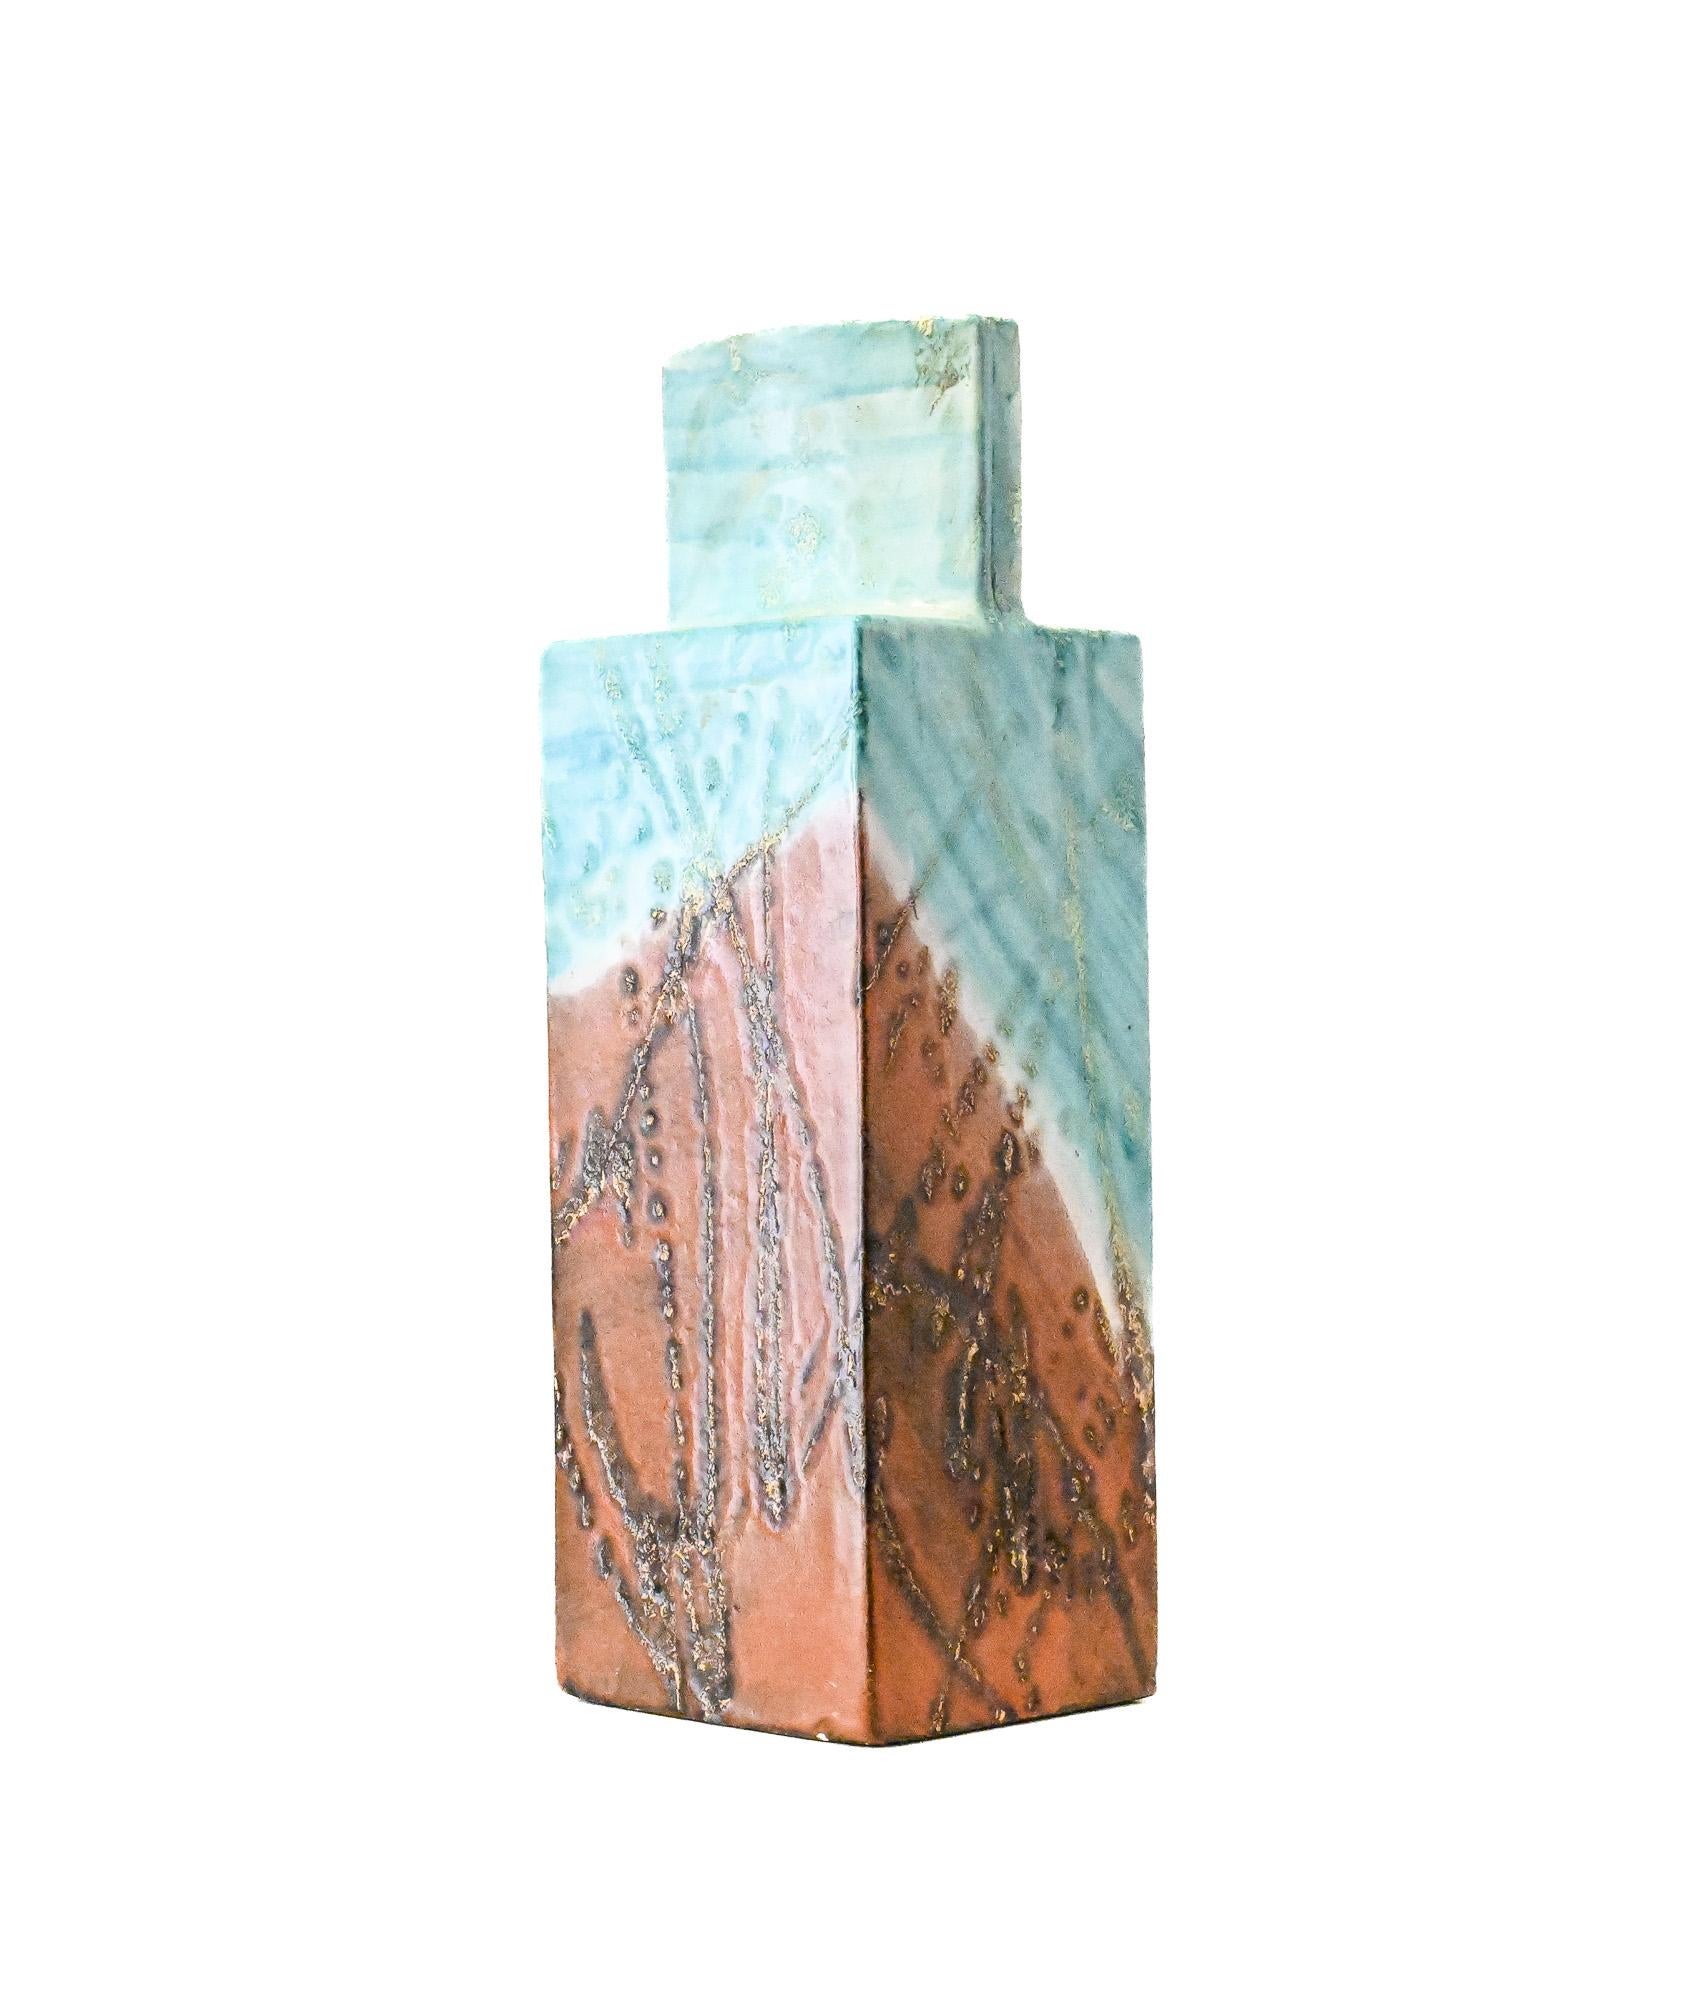 Square aqua and brown square slab vase by Marcello Fantoni Italy For Sale 6